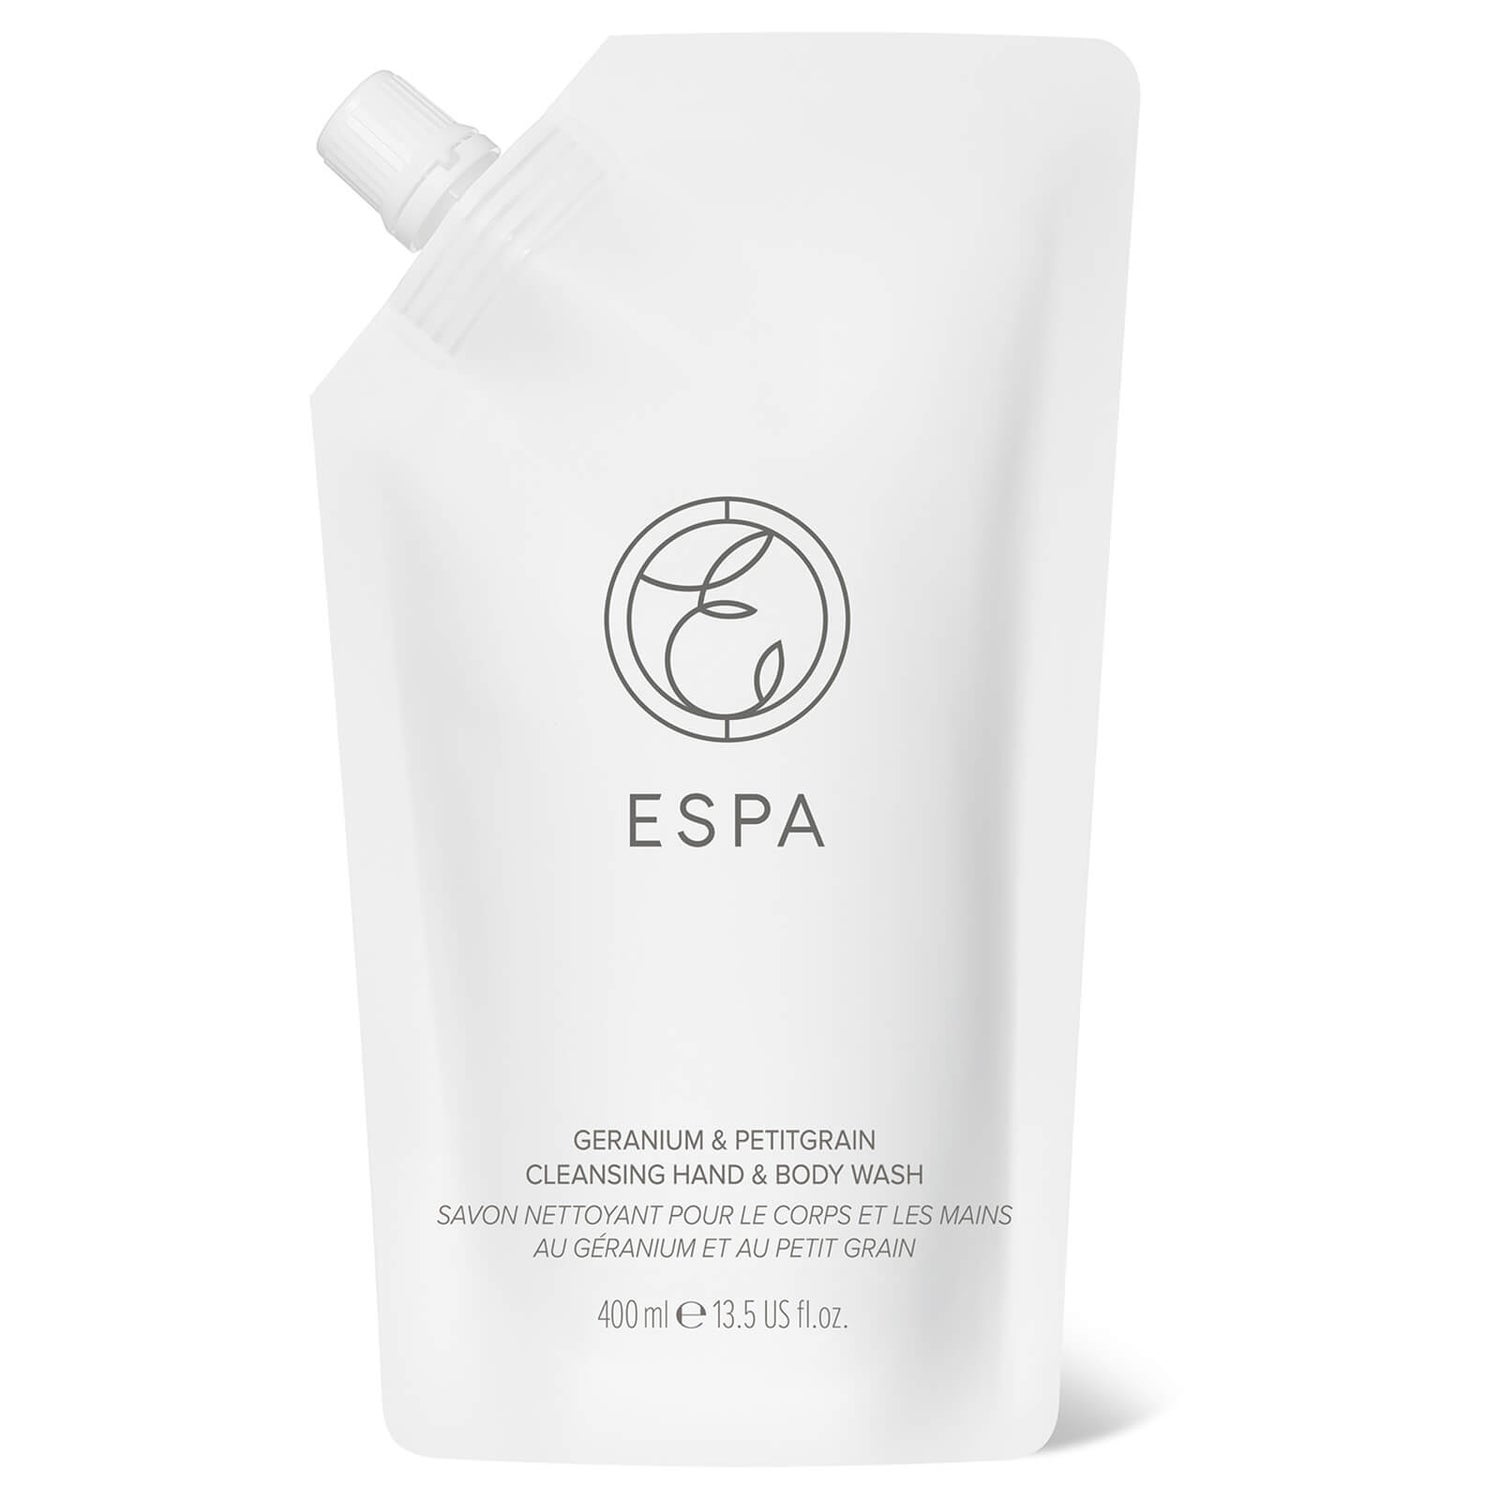 ESPA Geranium and Petitgrain Cleansing Hand and Body Wash 400ml